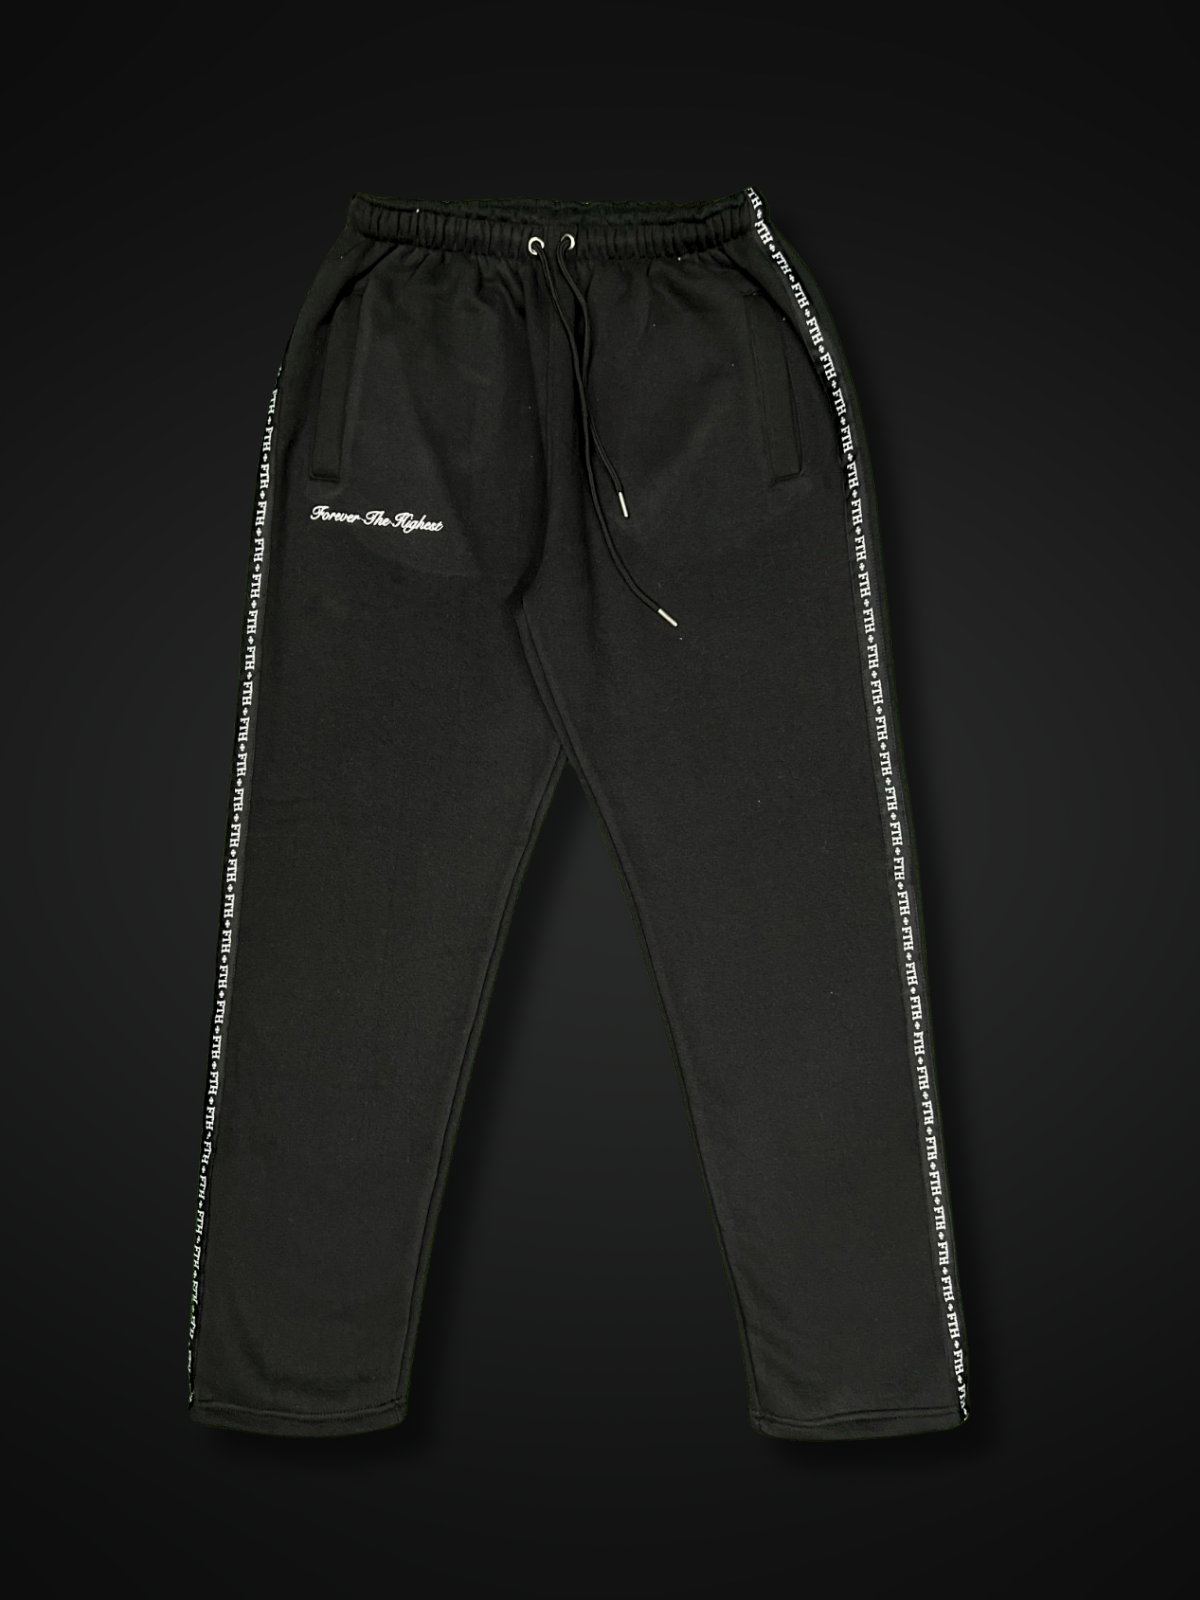 Black Sweatpants  Forever Classic Apparel Co.